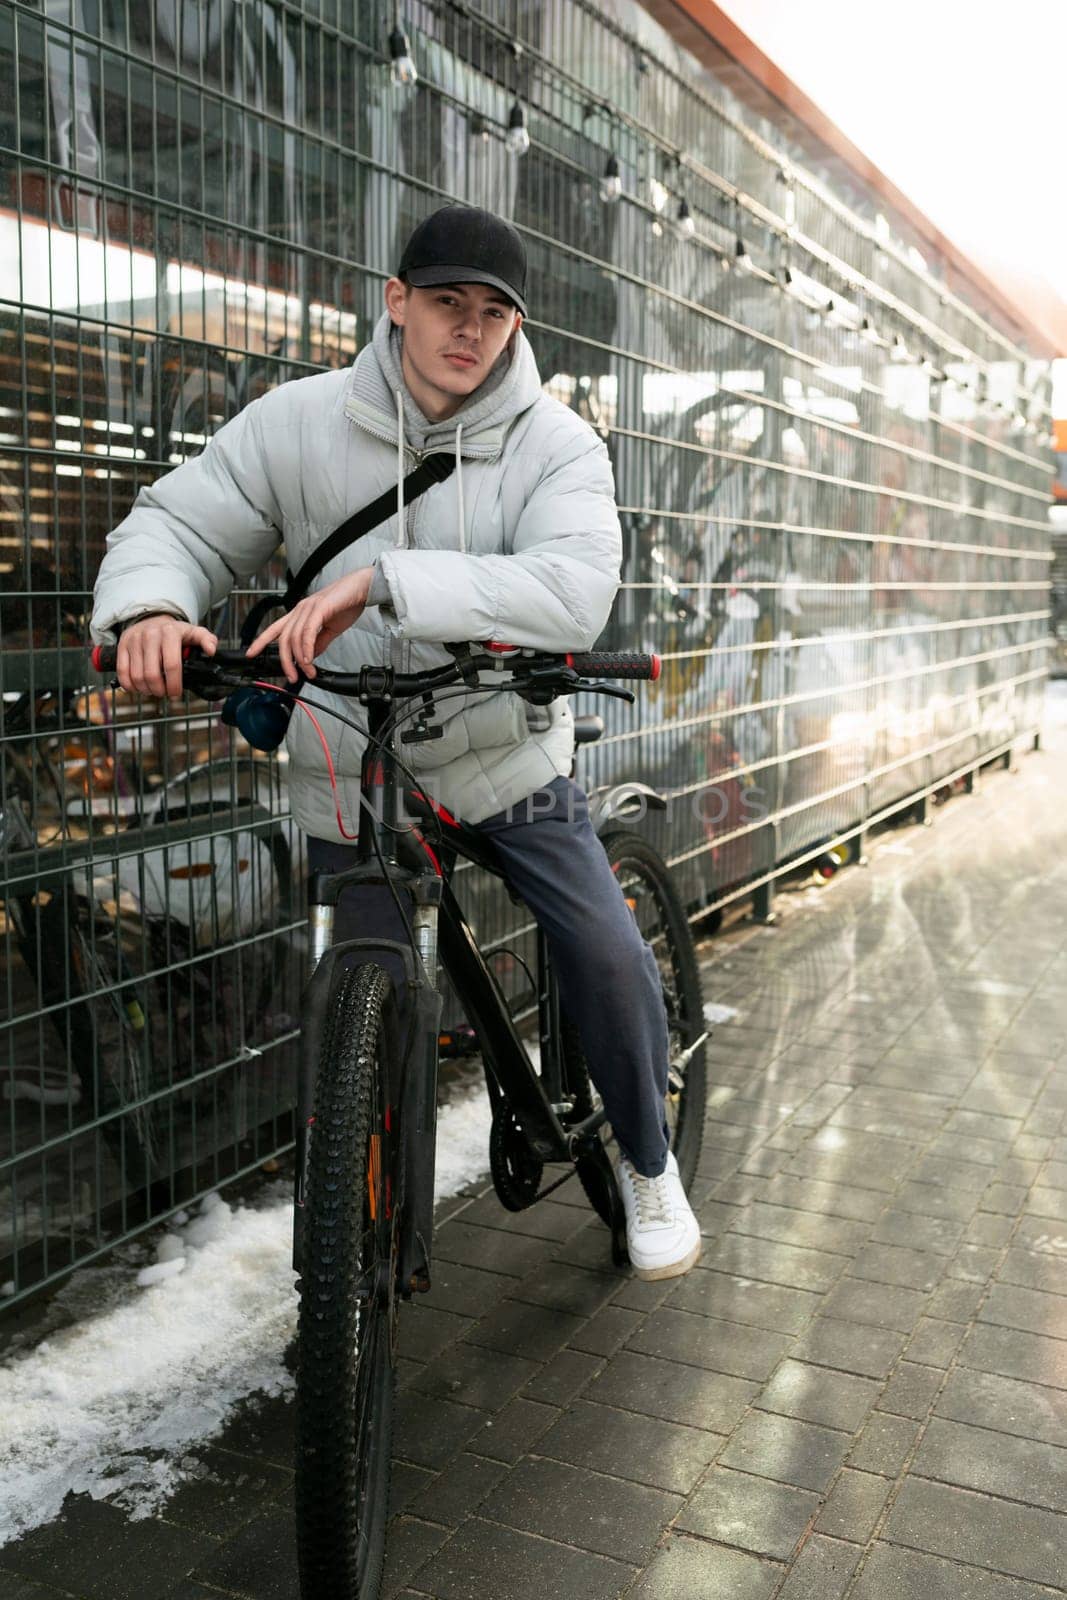 European man takes a bike ride through the city.